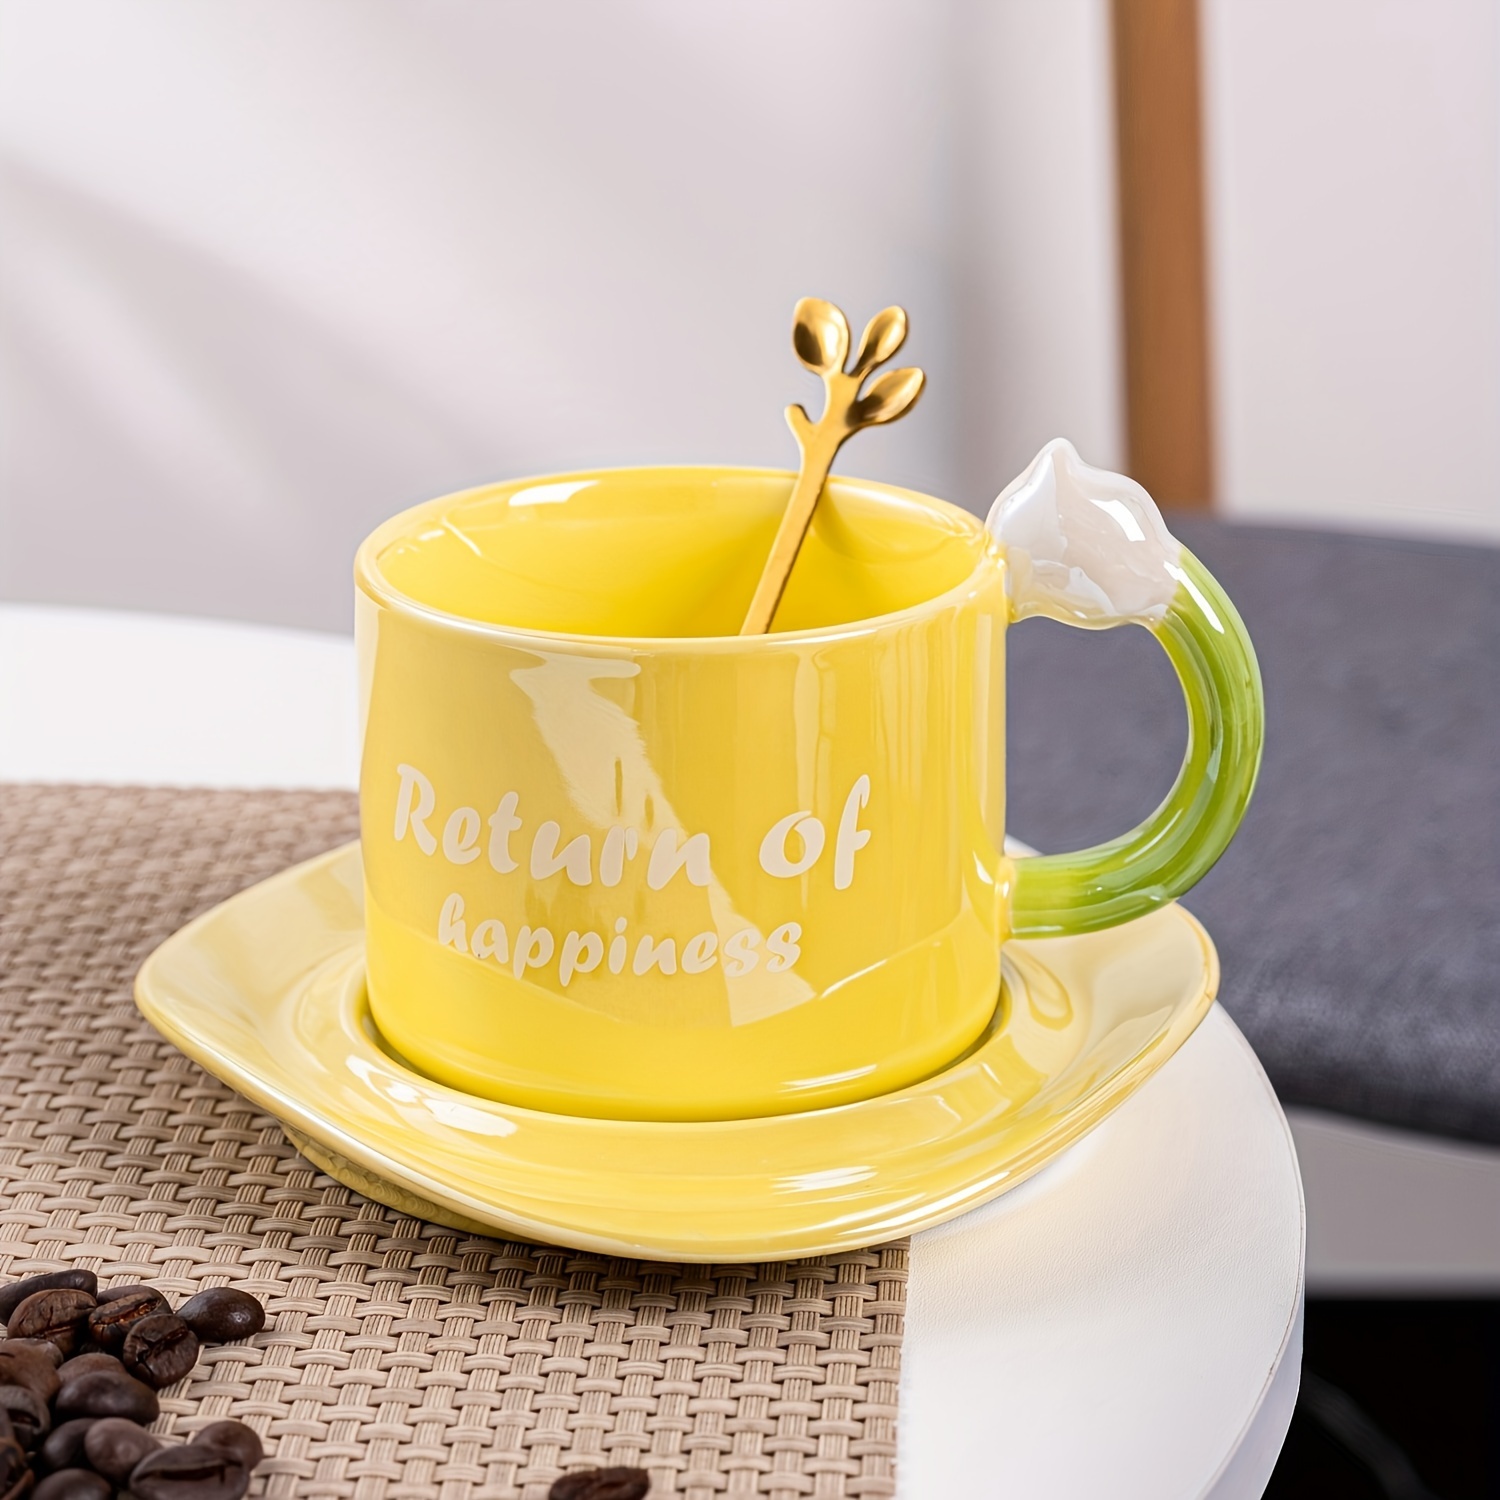  Cups, Mugs, Saucers: Home & Kitchen: Coffee Cups & Mugs, Cup &  Saucer Sets, Teacups, Mug Sets & More